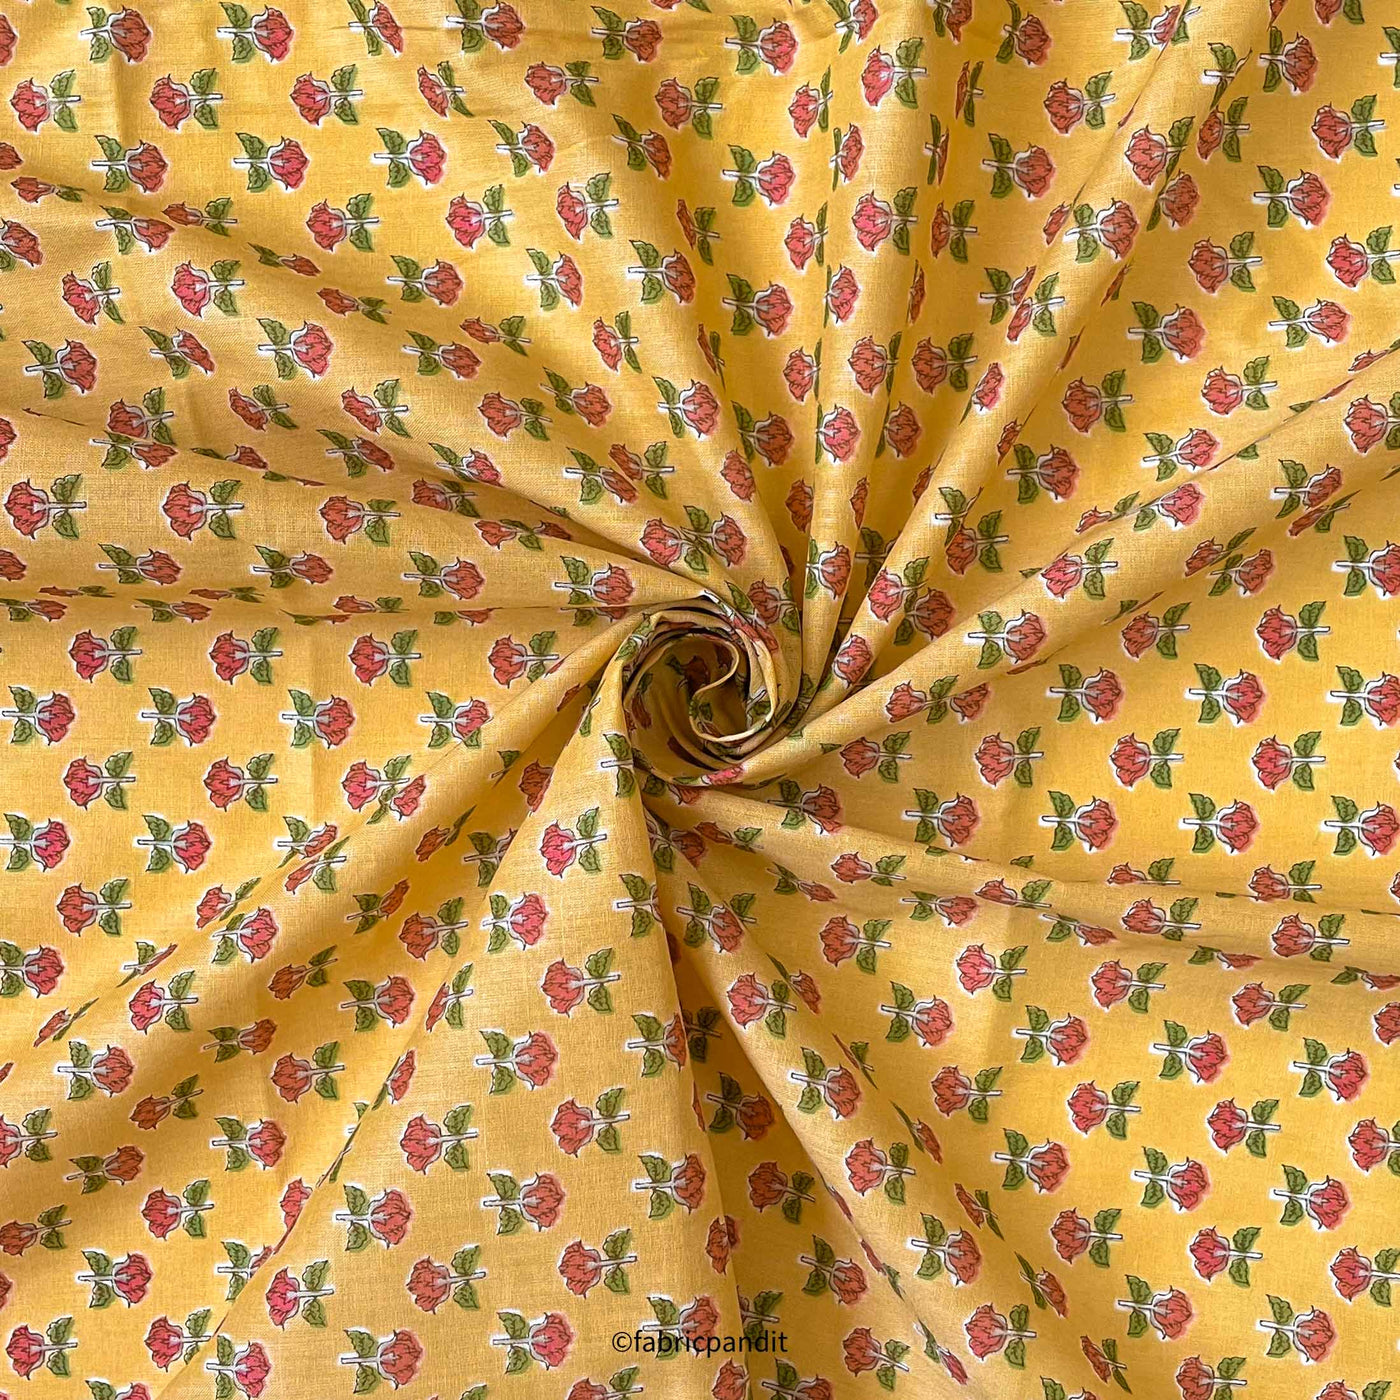 Hand Block Printed Cotton Fabric Cut Piece (CUT PIECE) Mango Yellow and Peach Mini Lilies Hand Block Printed Pure Cotton Fabric (Width 42 inches)